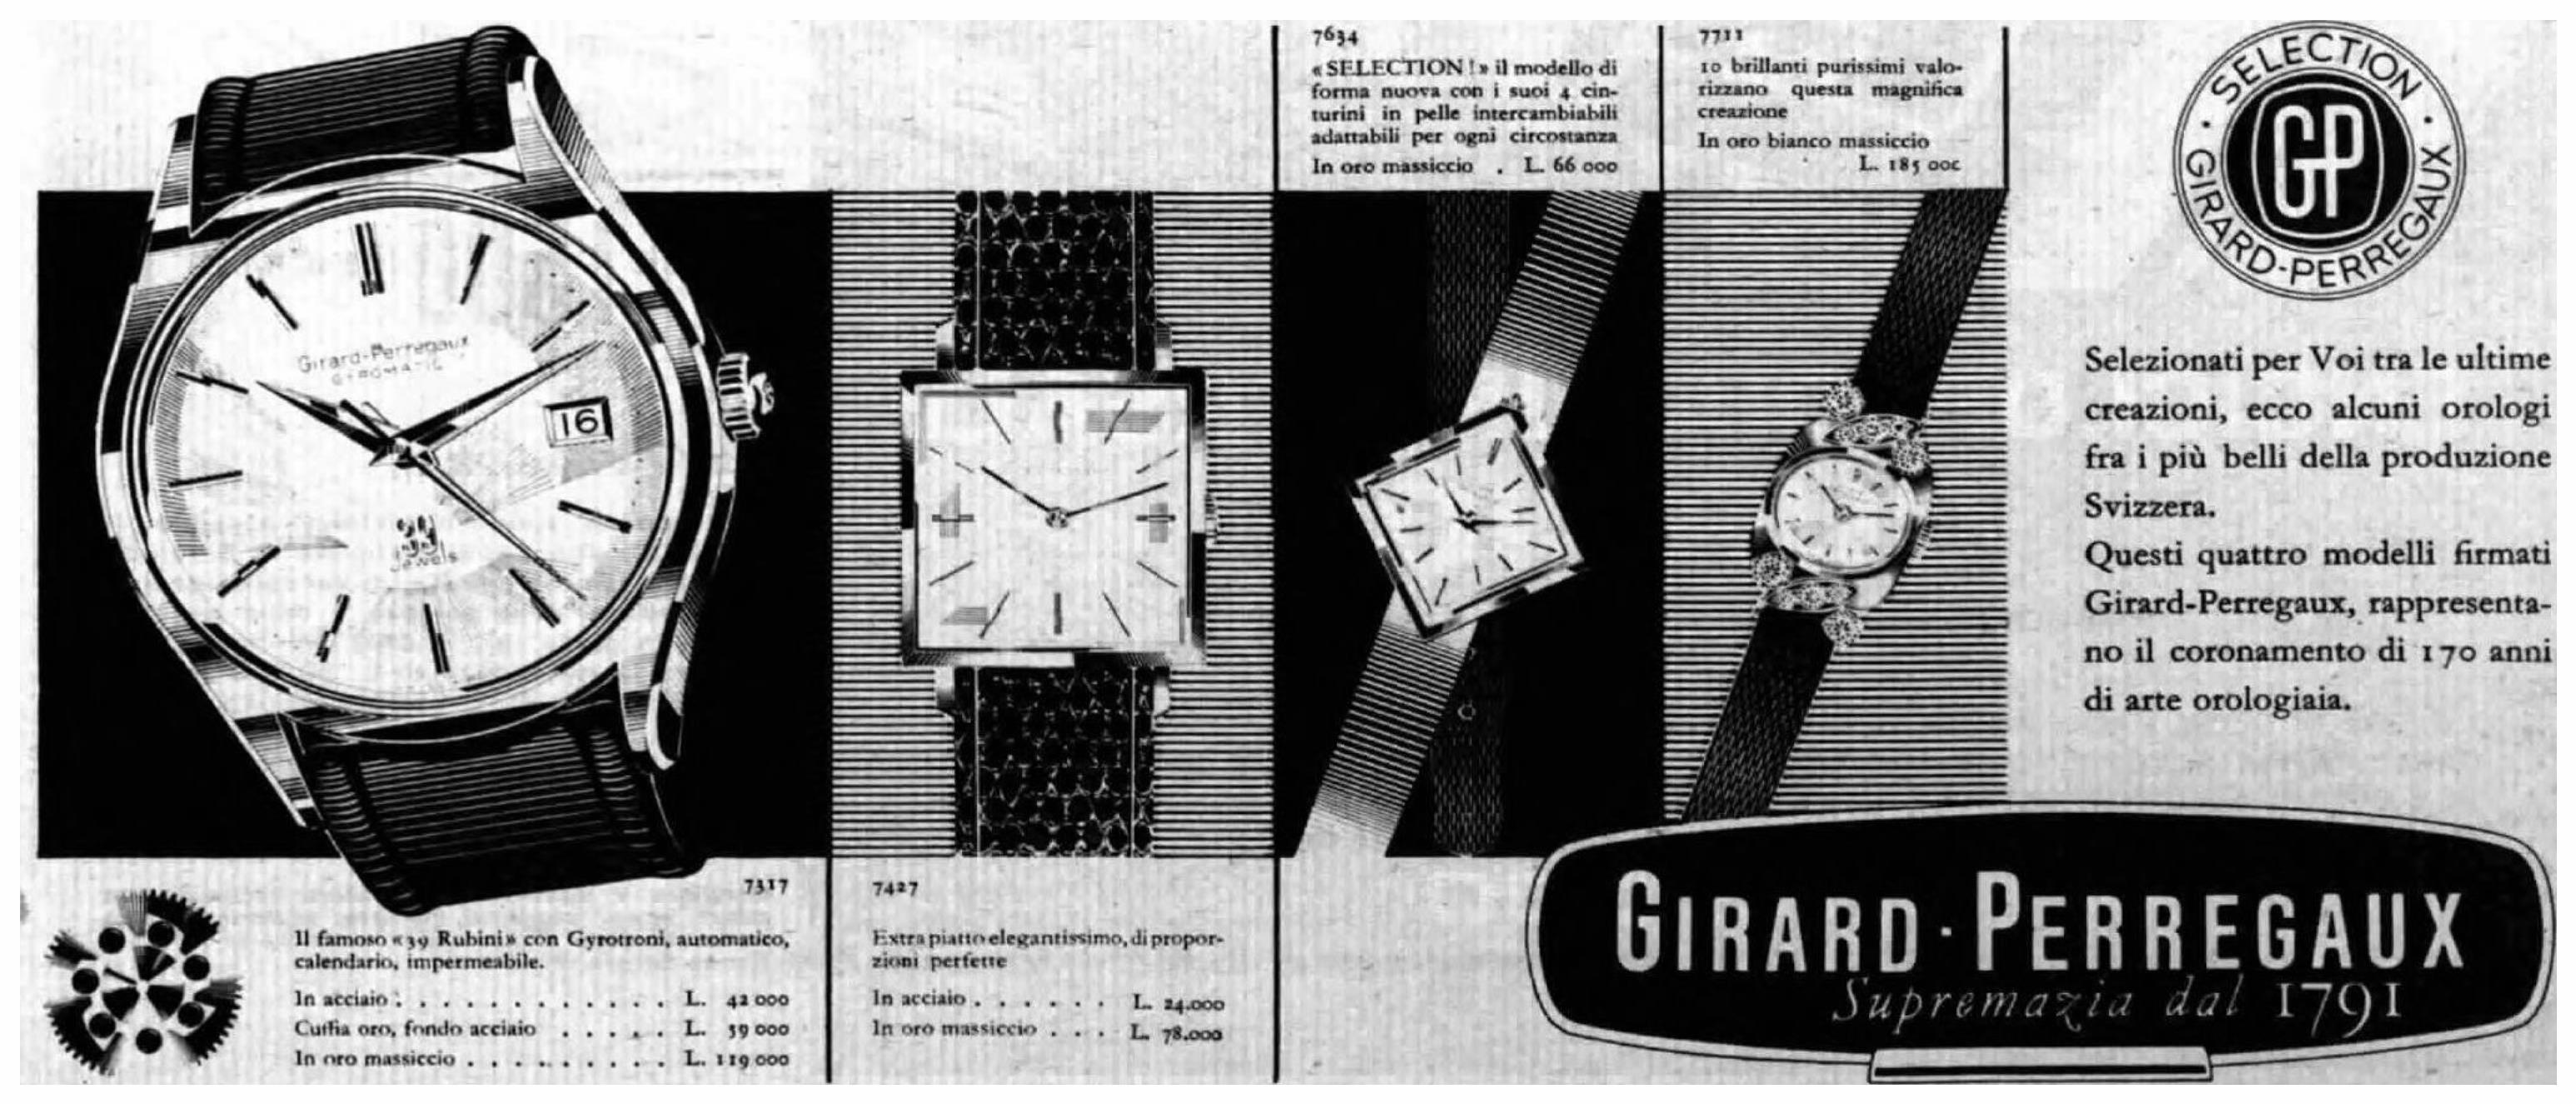 Girard-Perregaux 1961 198.jpg